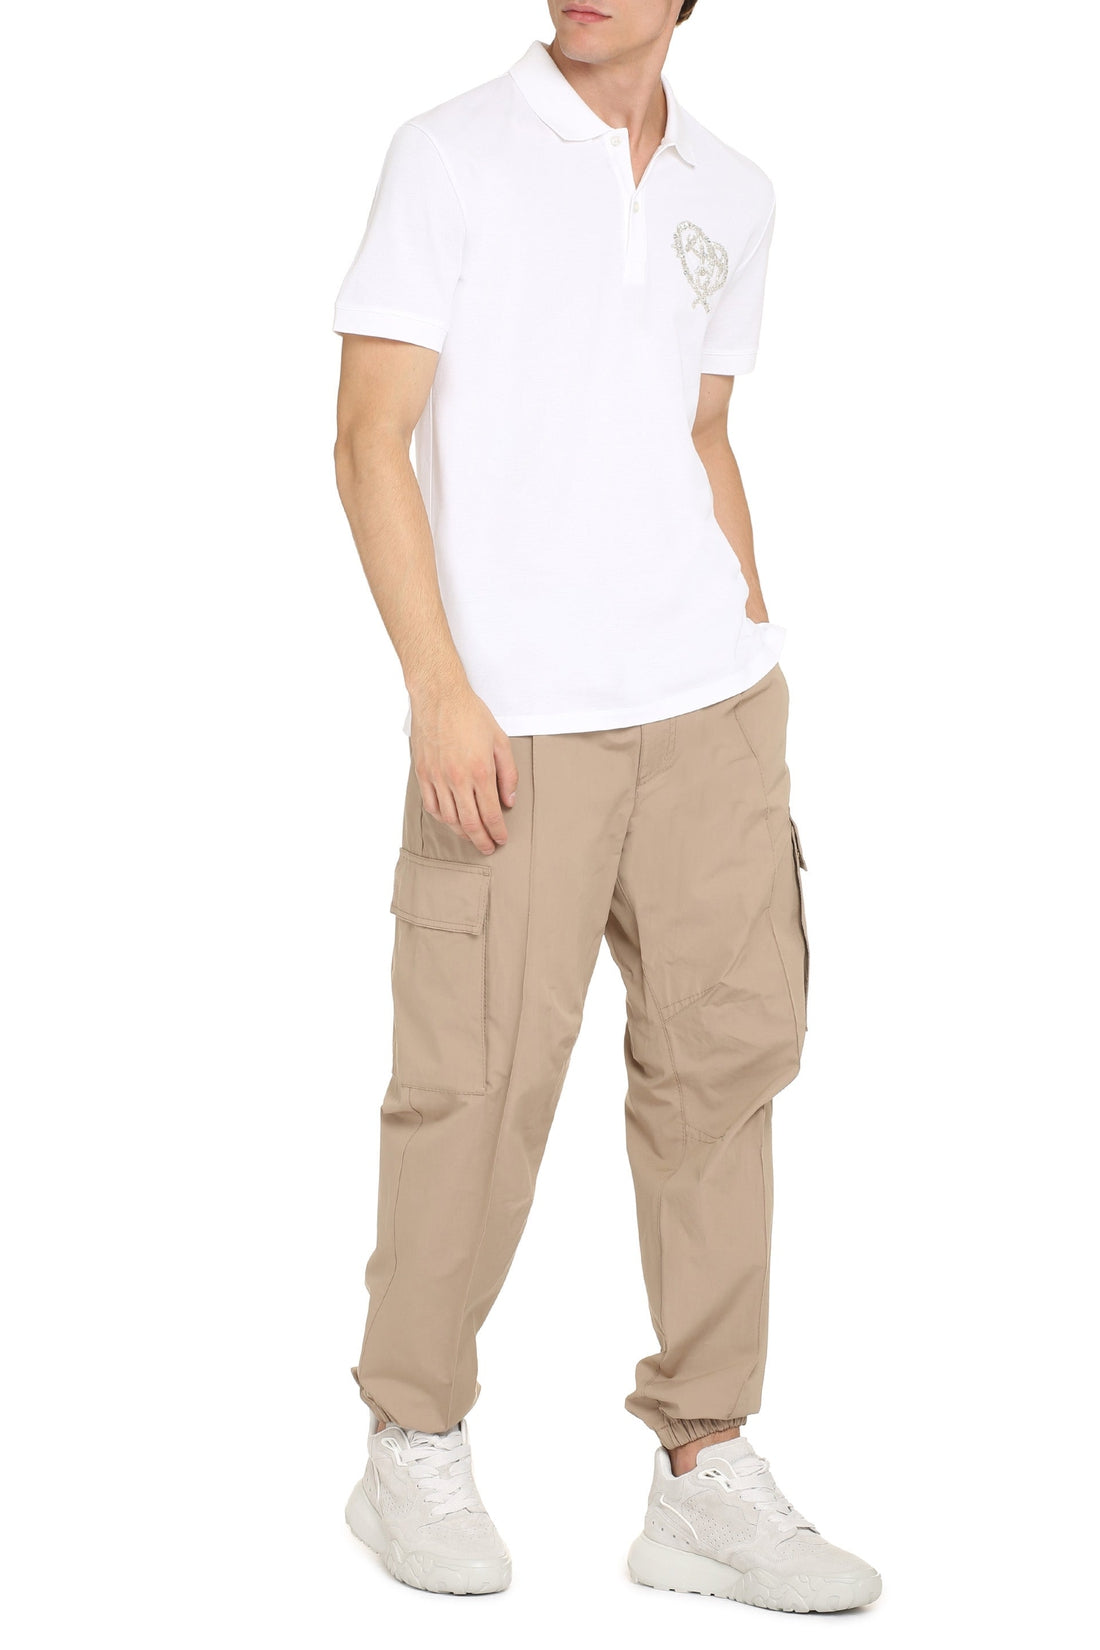 Alexander McQueen-OUTLET-SALE-Short sleeve cotton polo shirt-ARCHIVIST